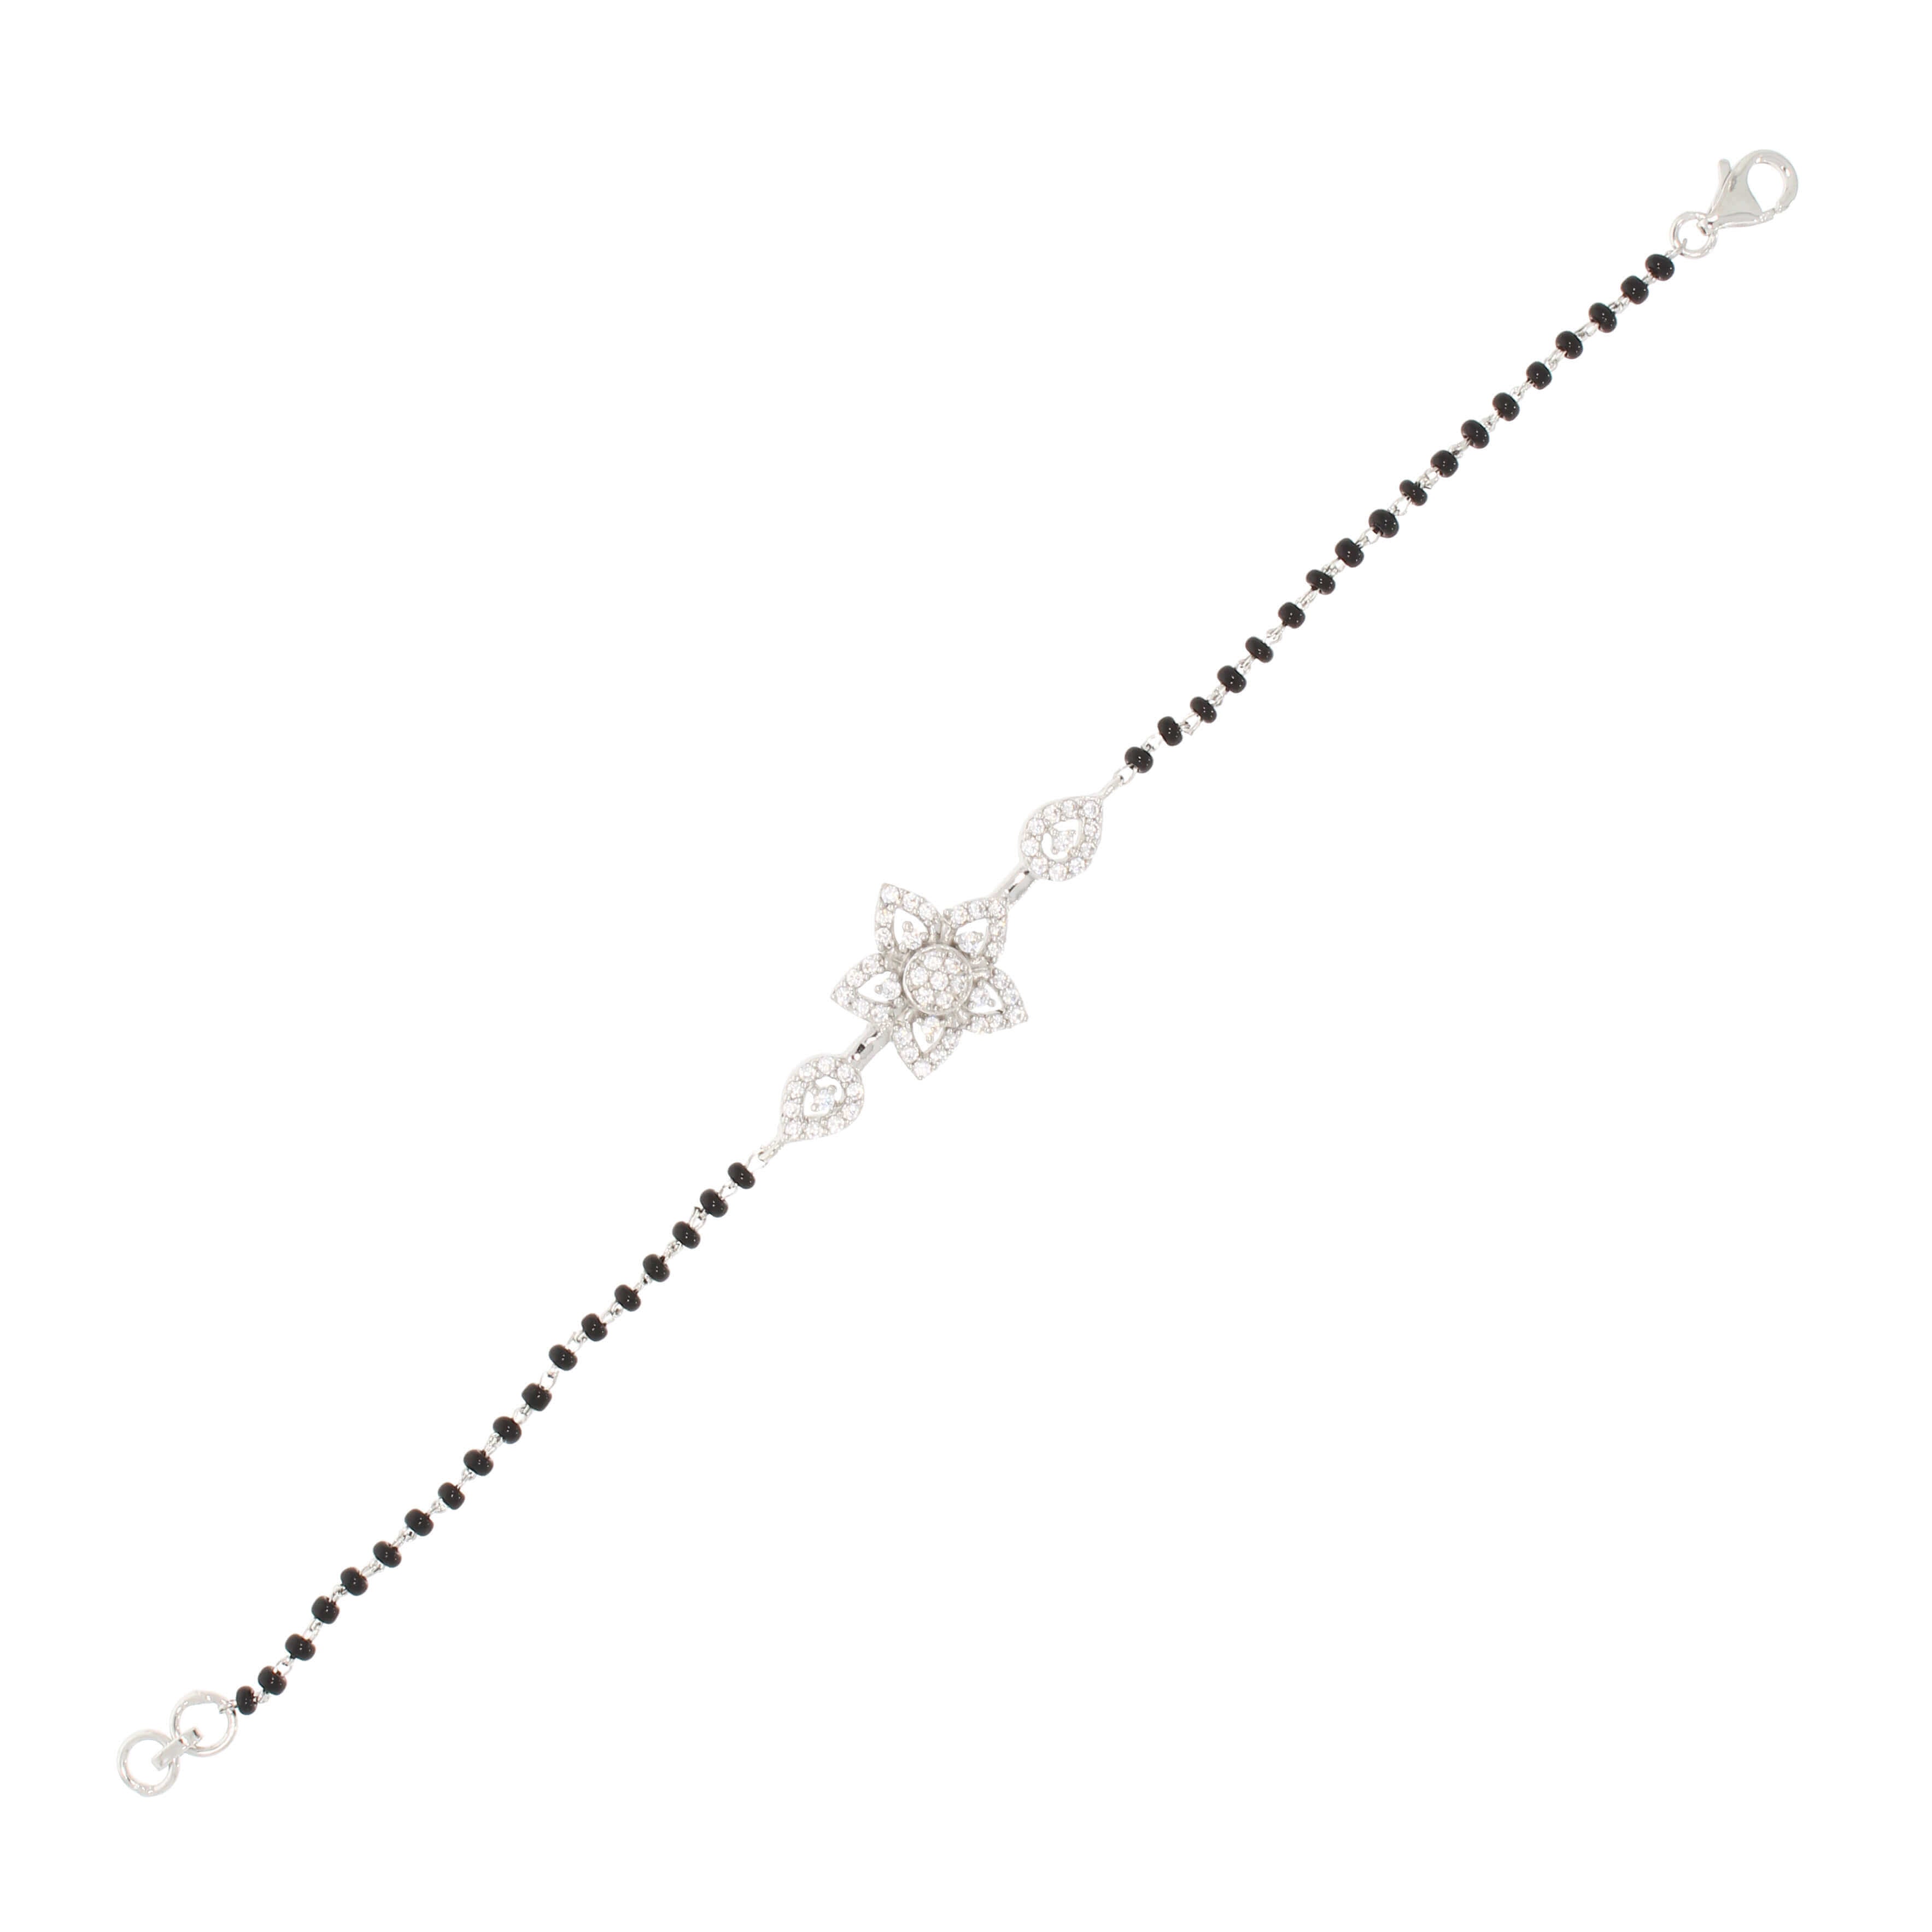 Black Beaded Star Mangalsutra Bracelet in Silver